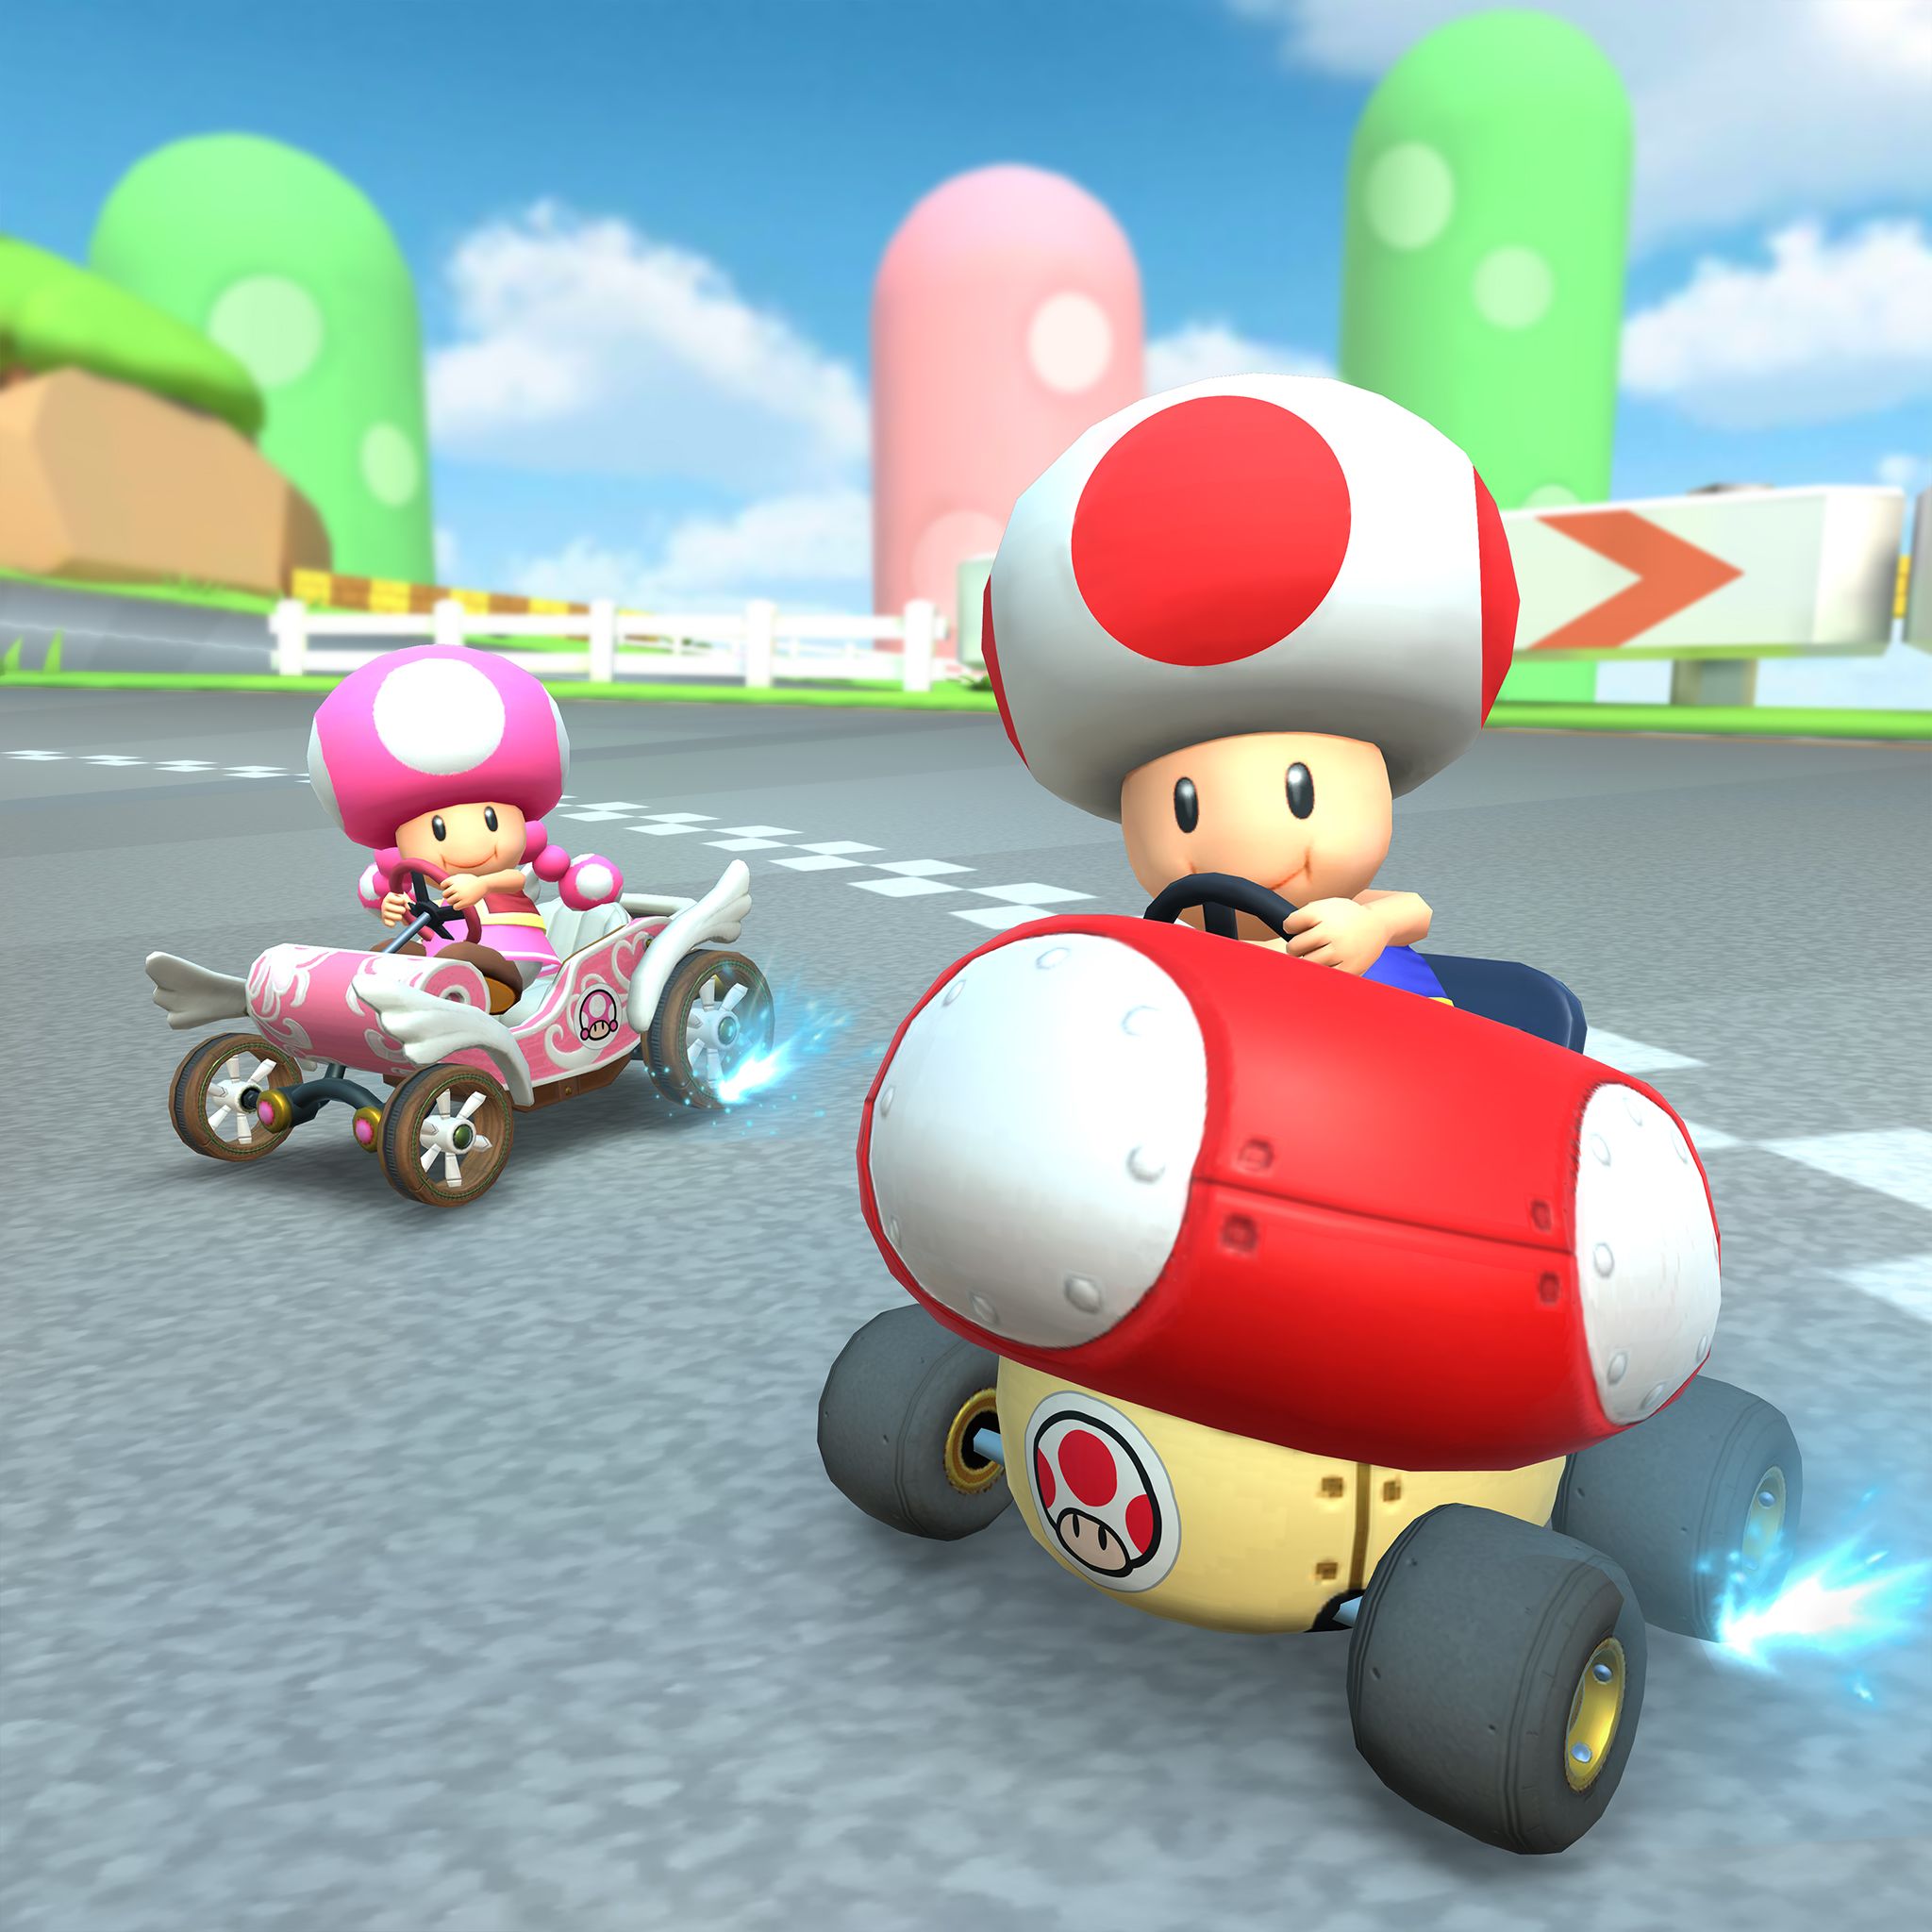 How Mario Kart Tour could bring Mario Kart up to speed, mario kart tour vai  acabar 